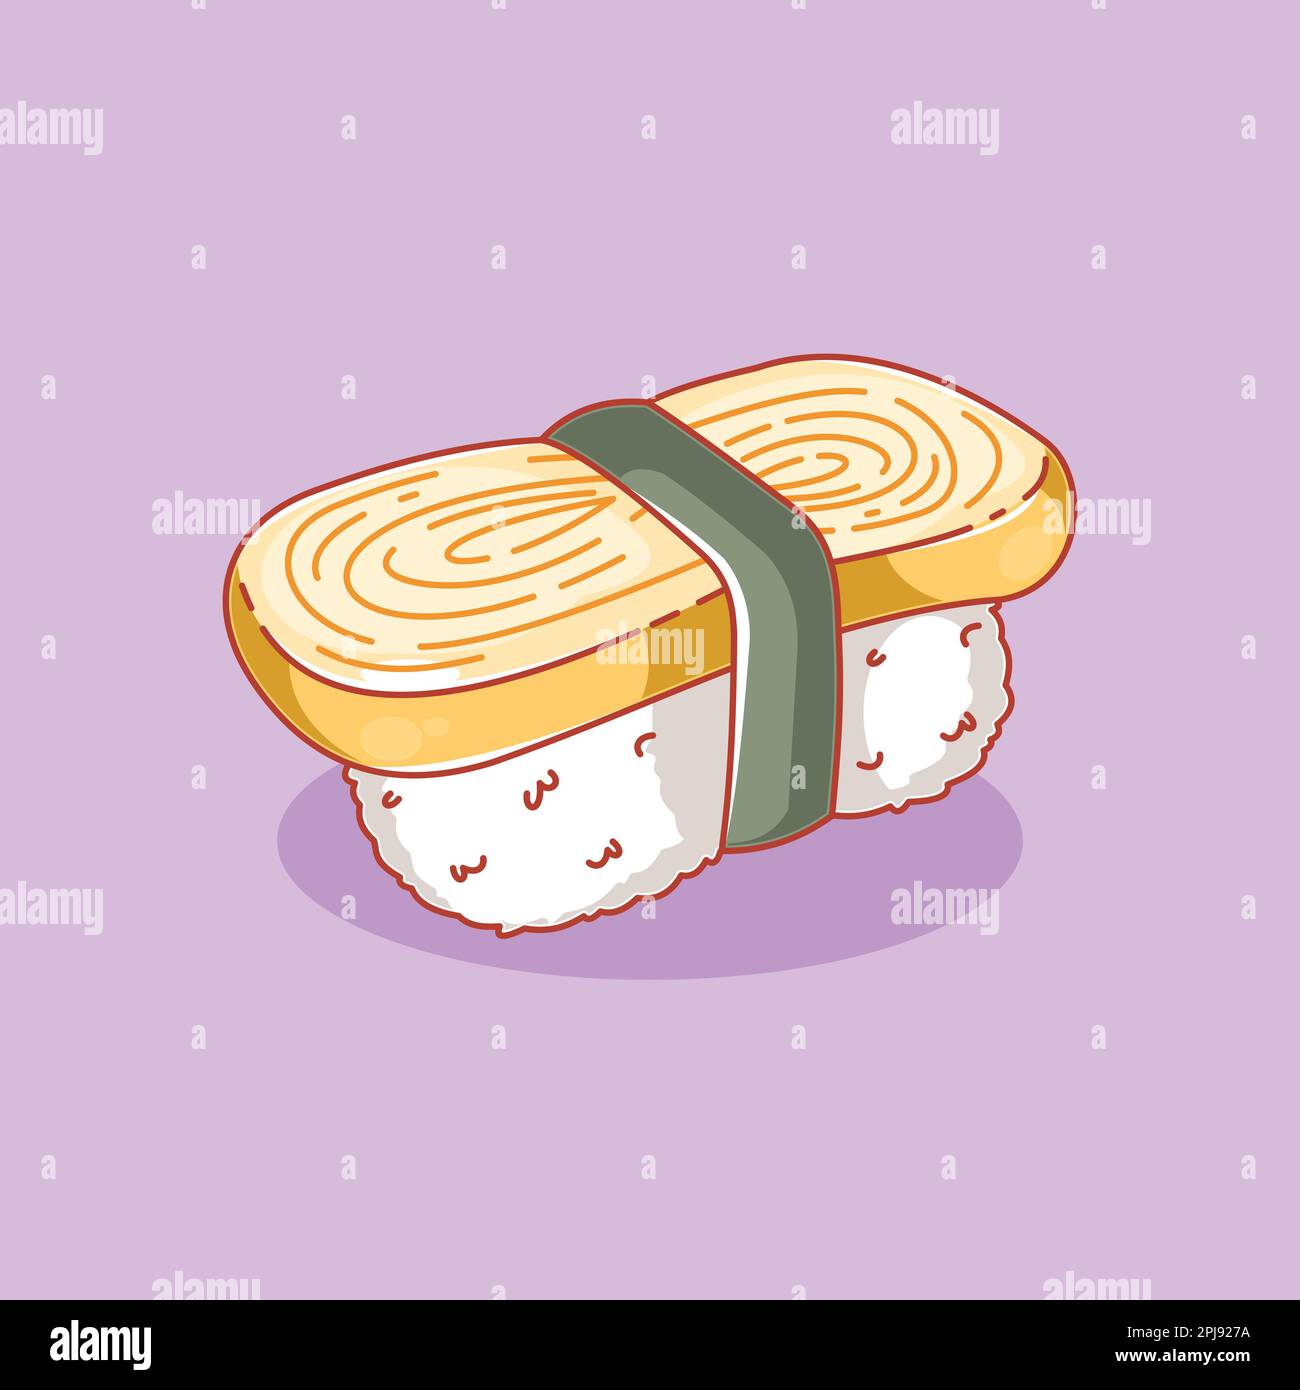 Cute cartoon style tamagoyaki nigiri design Stock Vector